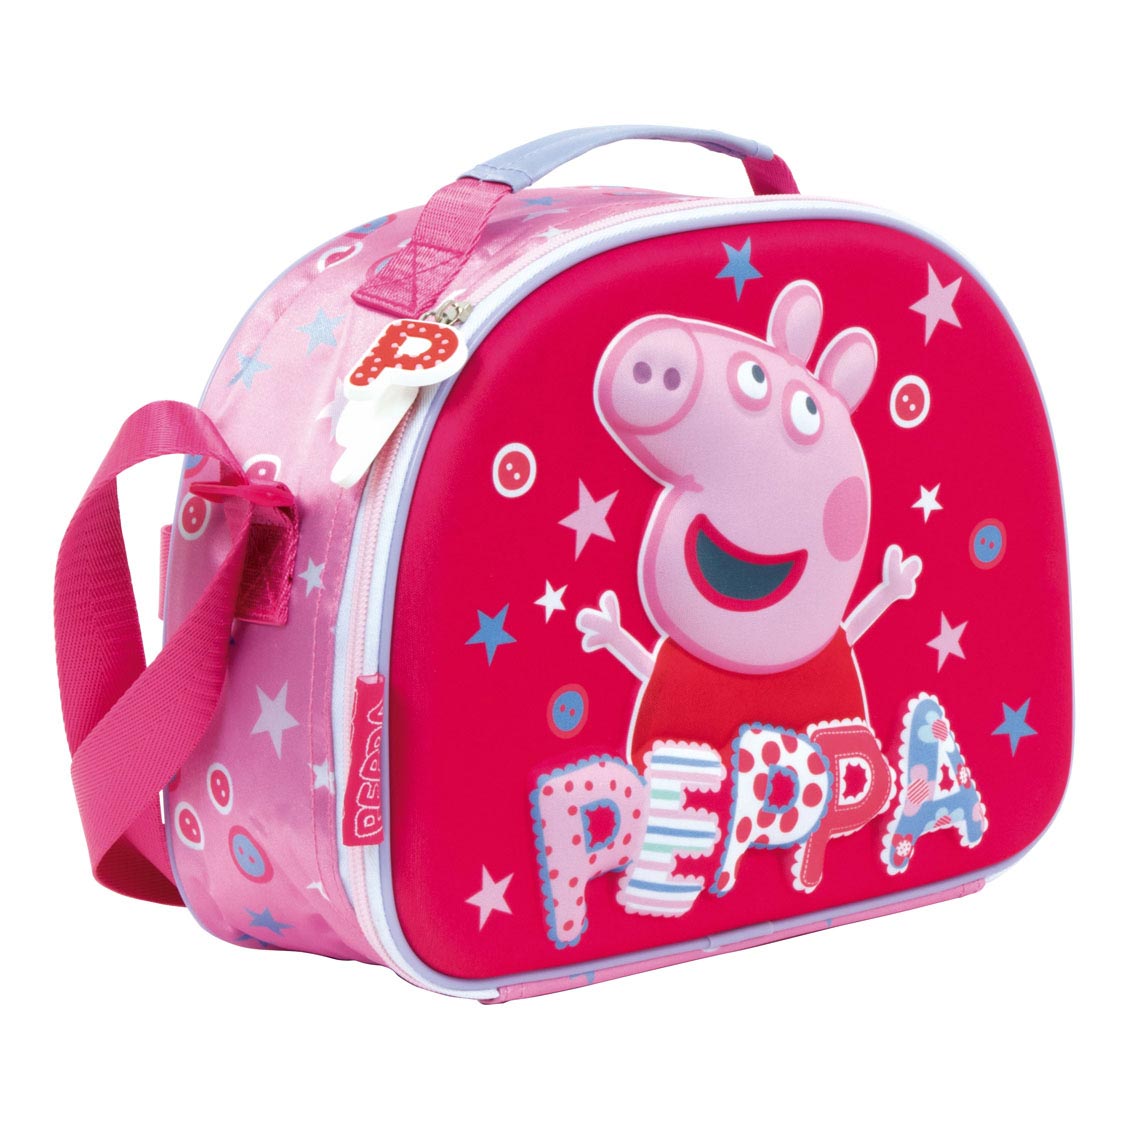 Peppa Pig Lunch Bag- YAY